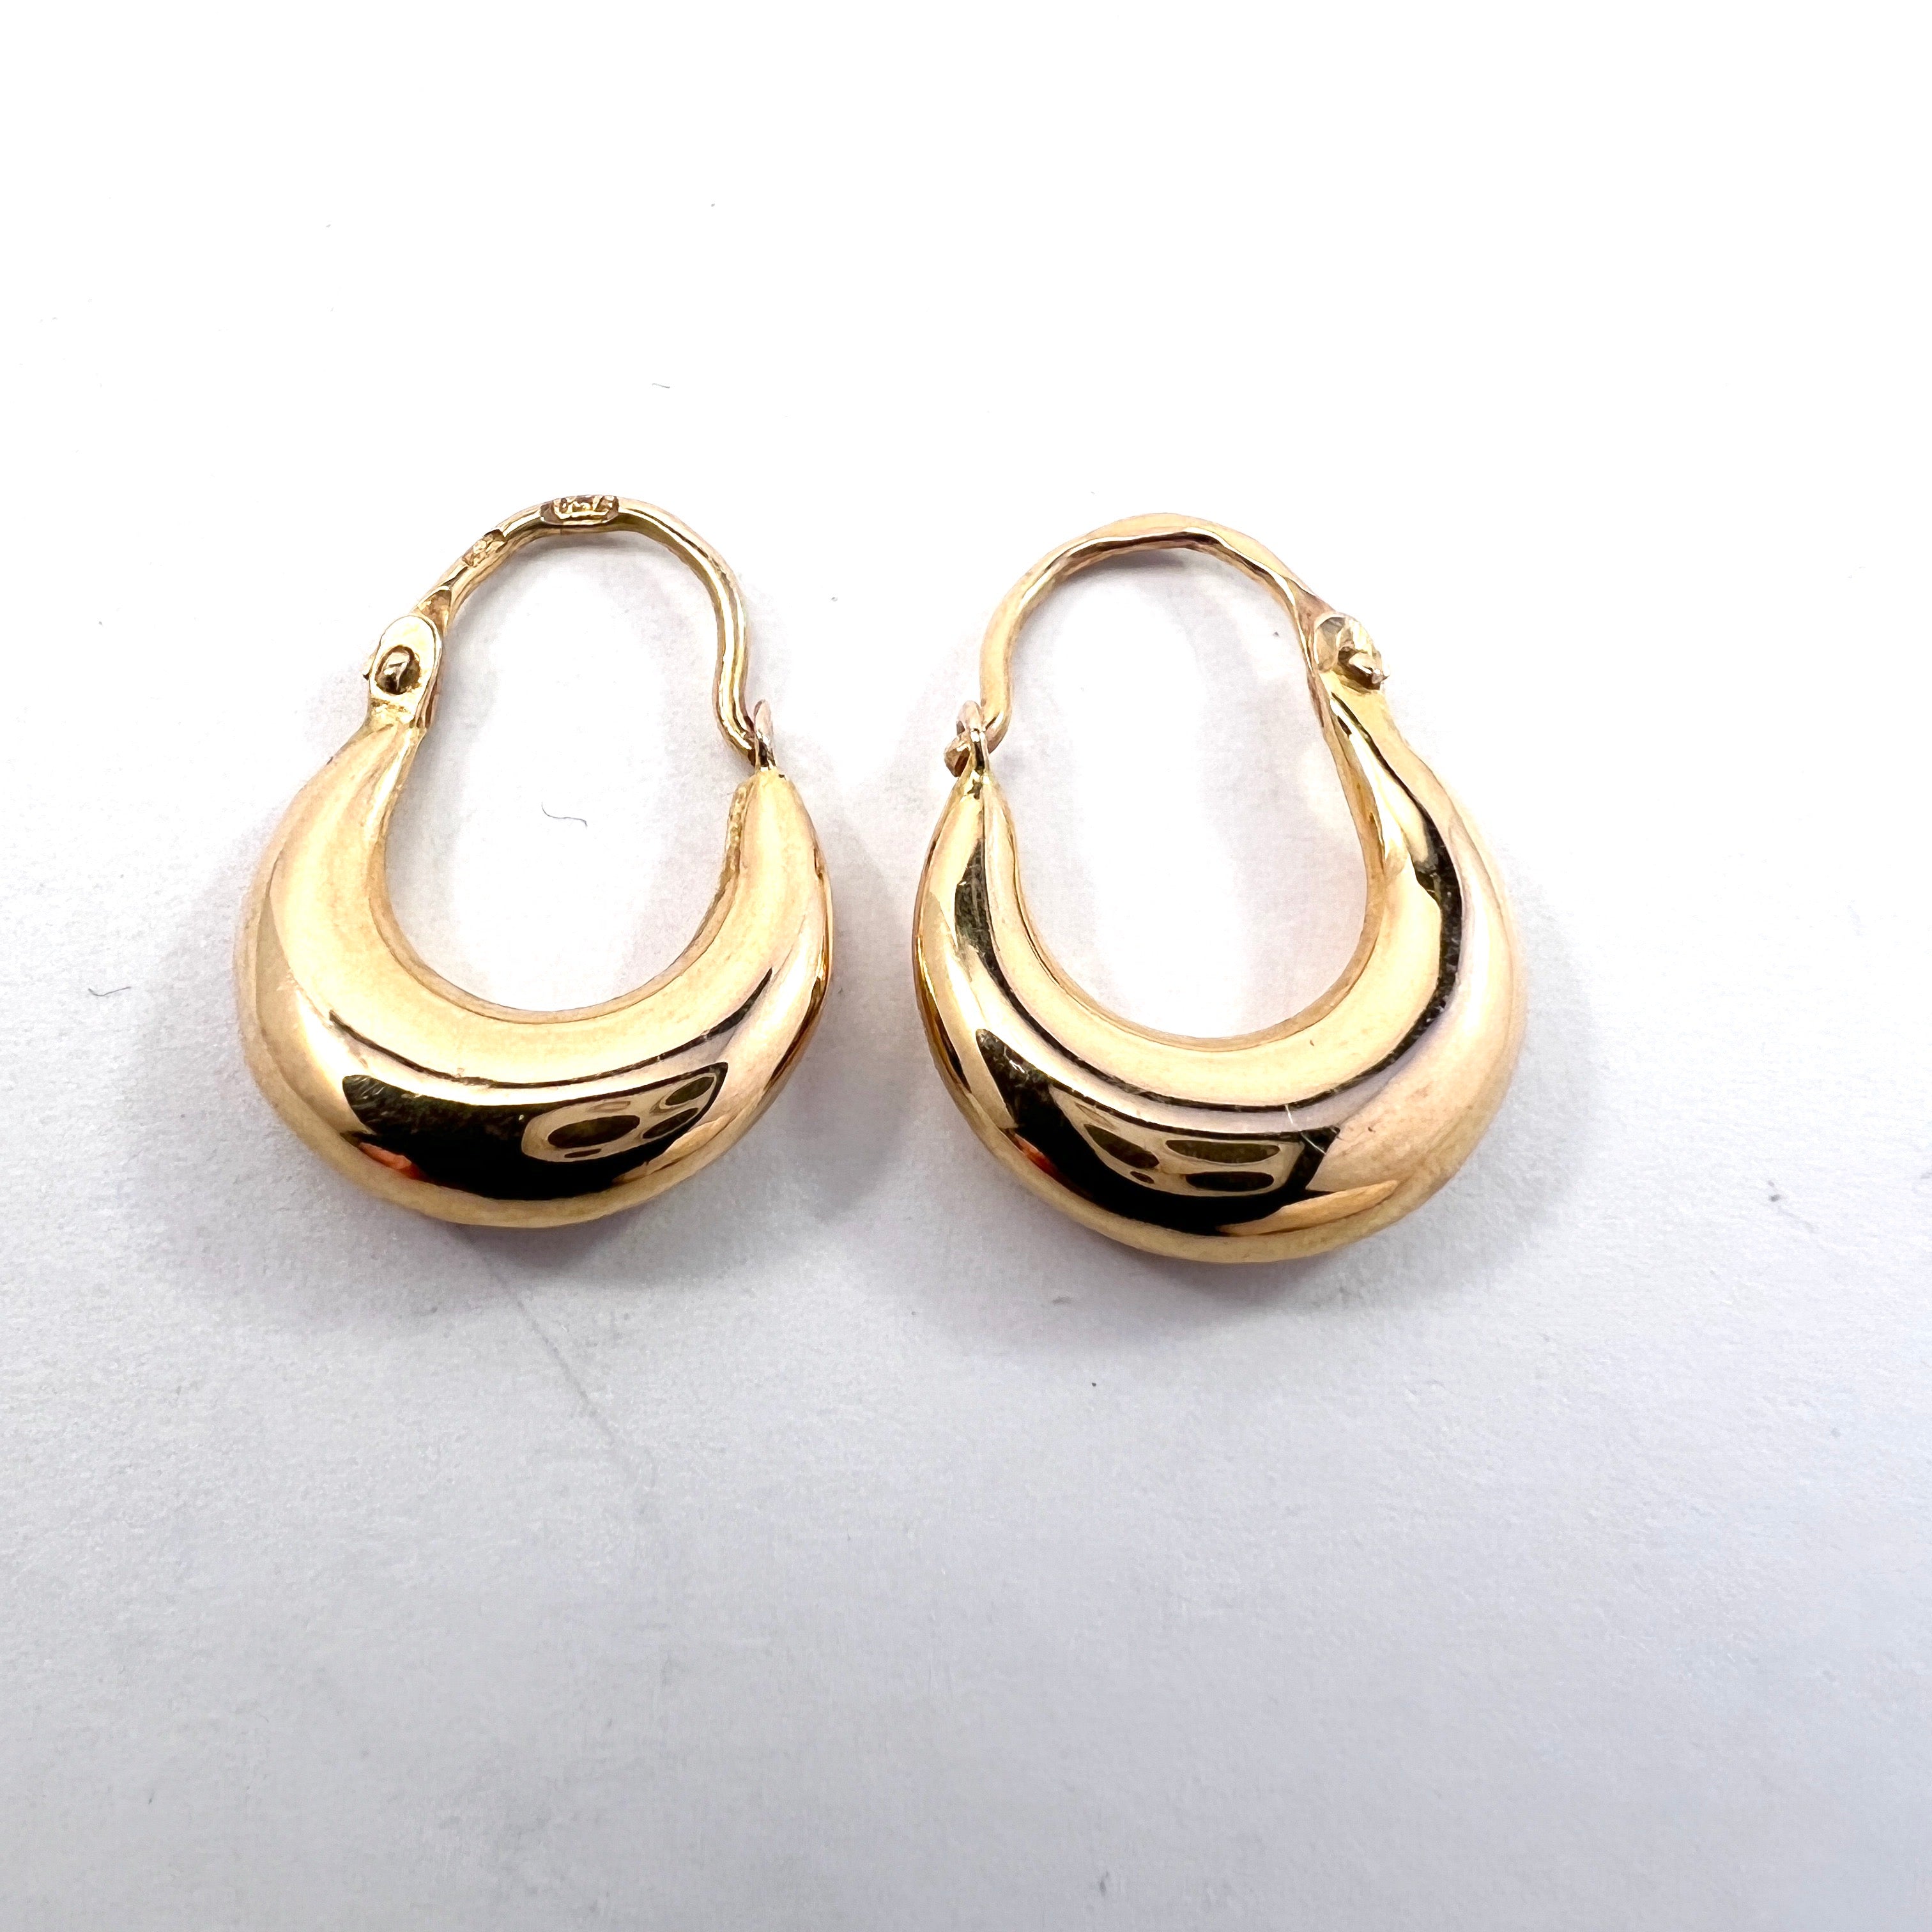 Sweden 1960-70s. Vintage 18k Gold Earrings.